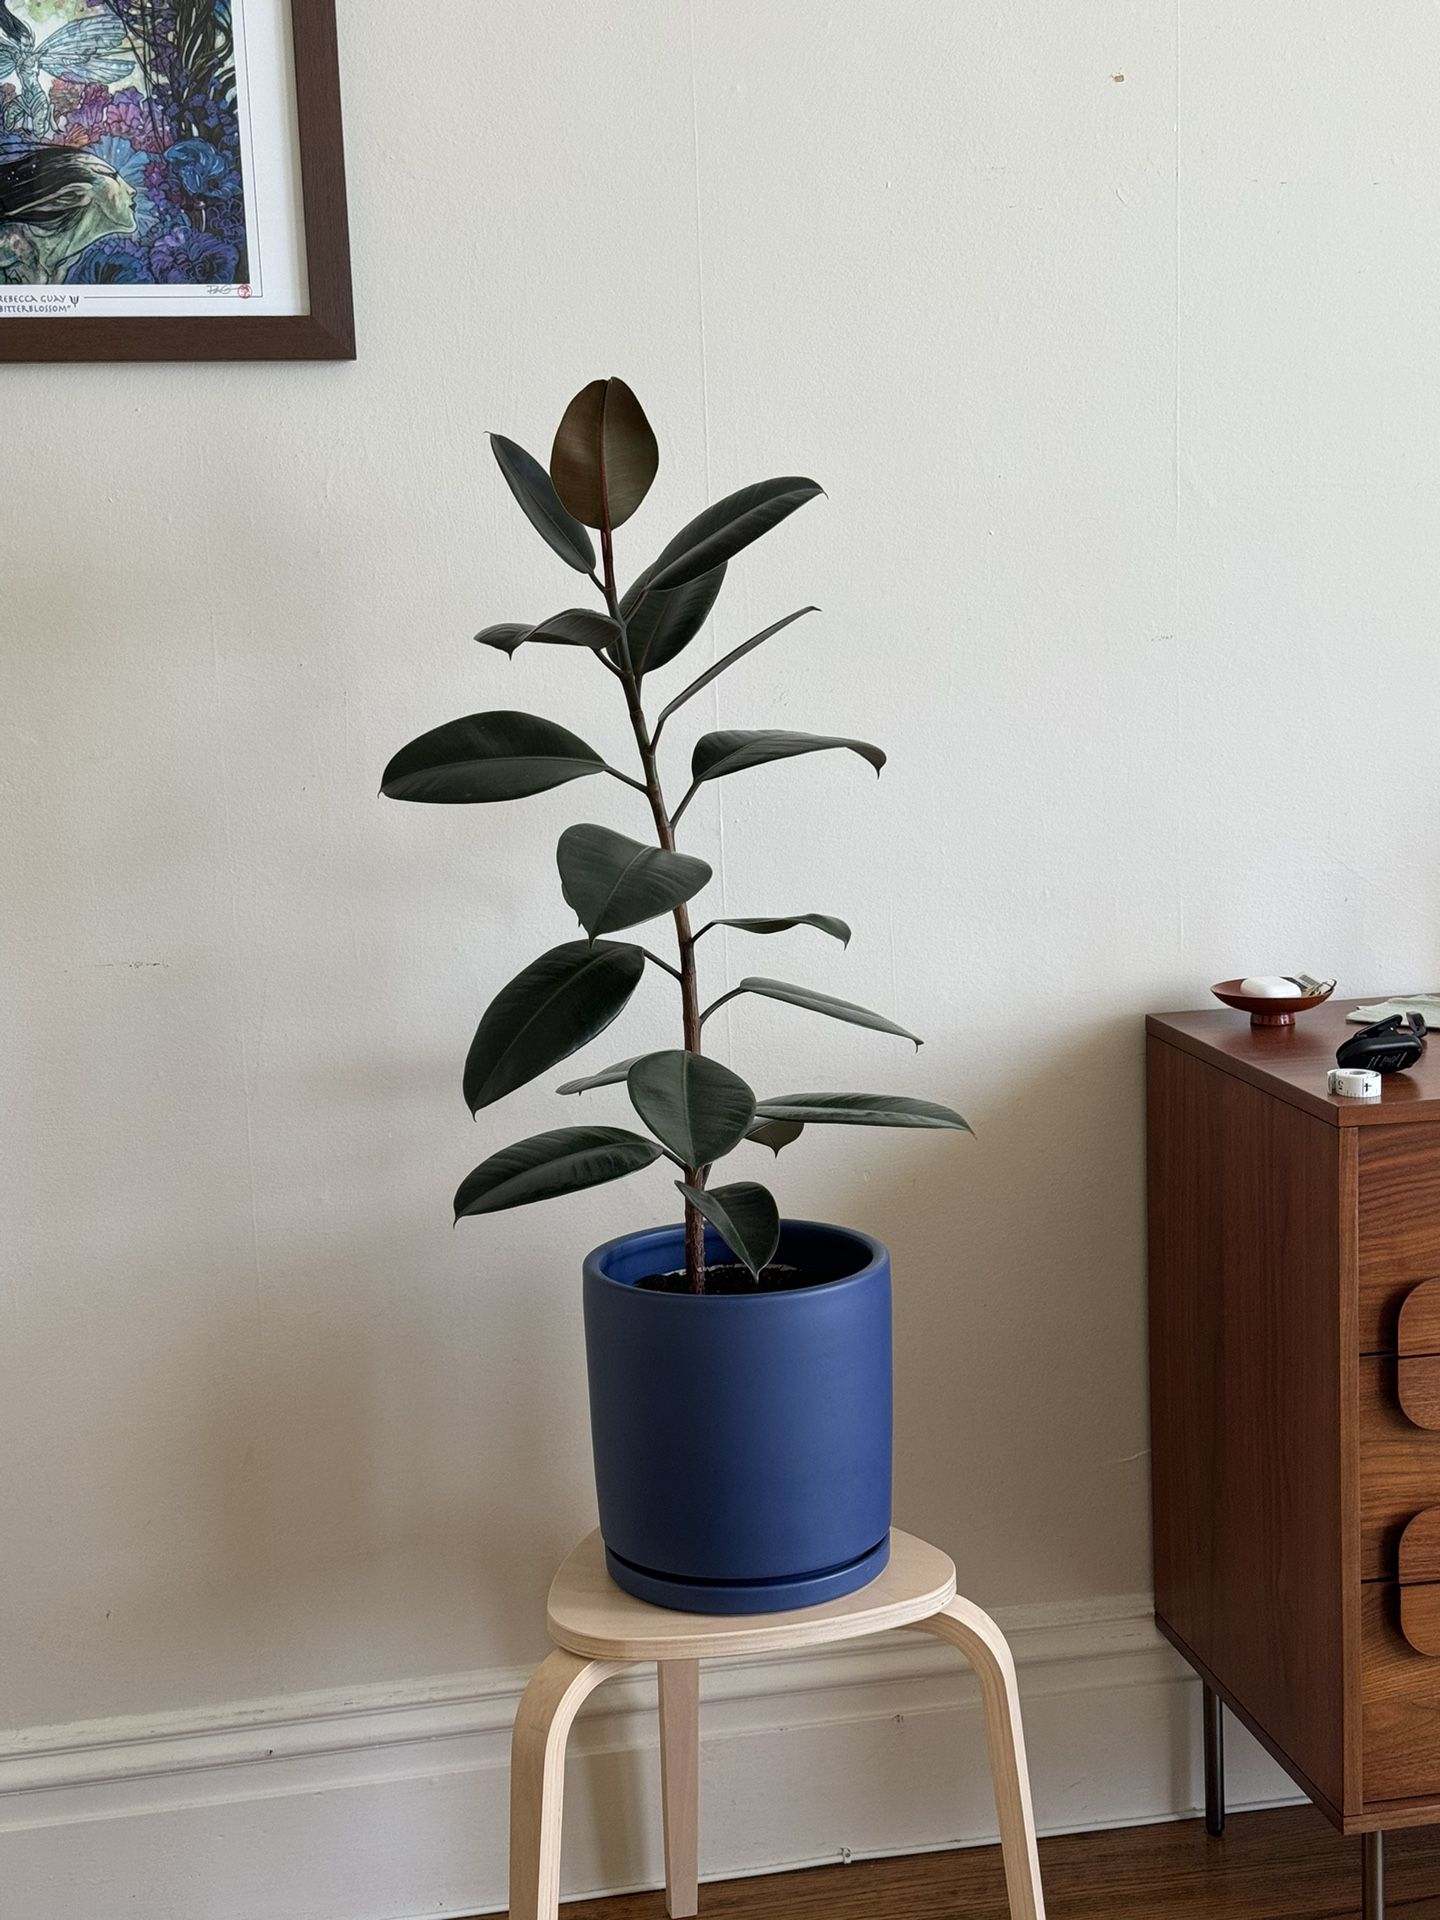 Rubber Plant / Ficus Elastica ‘Burgundy’ 40” with Periwinkle Blue Pot